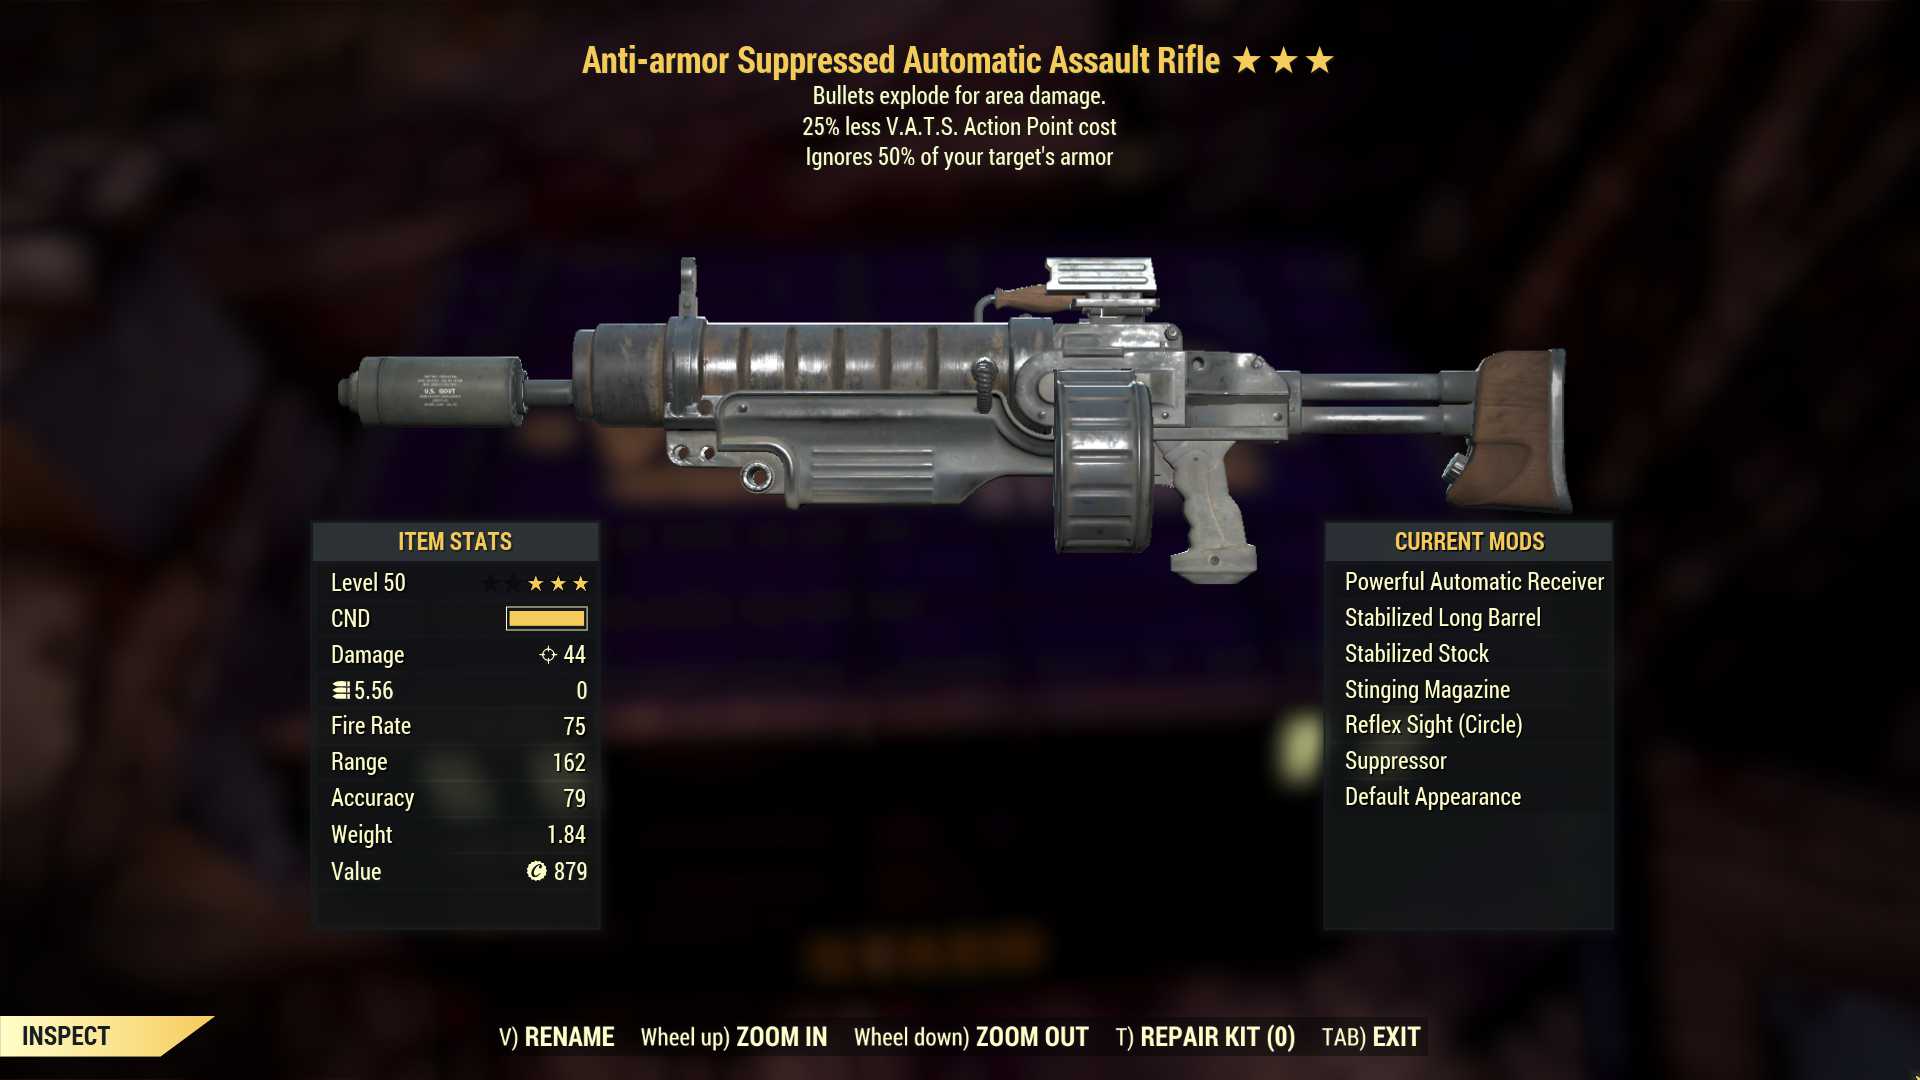 Anti-Armor Explosive Assault Rifle (25% less VATS AP cost)